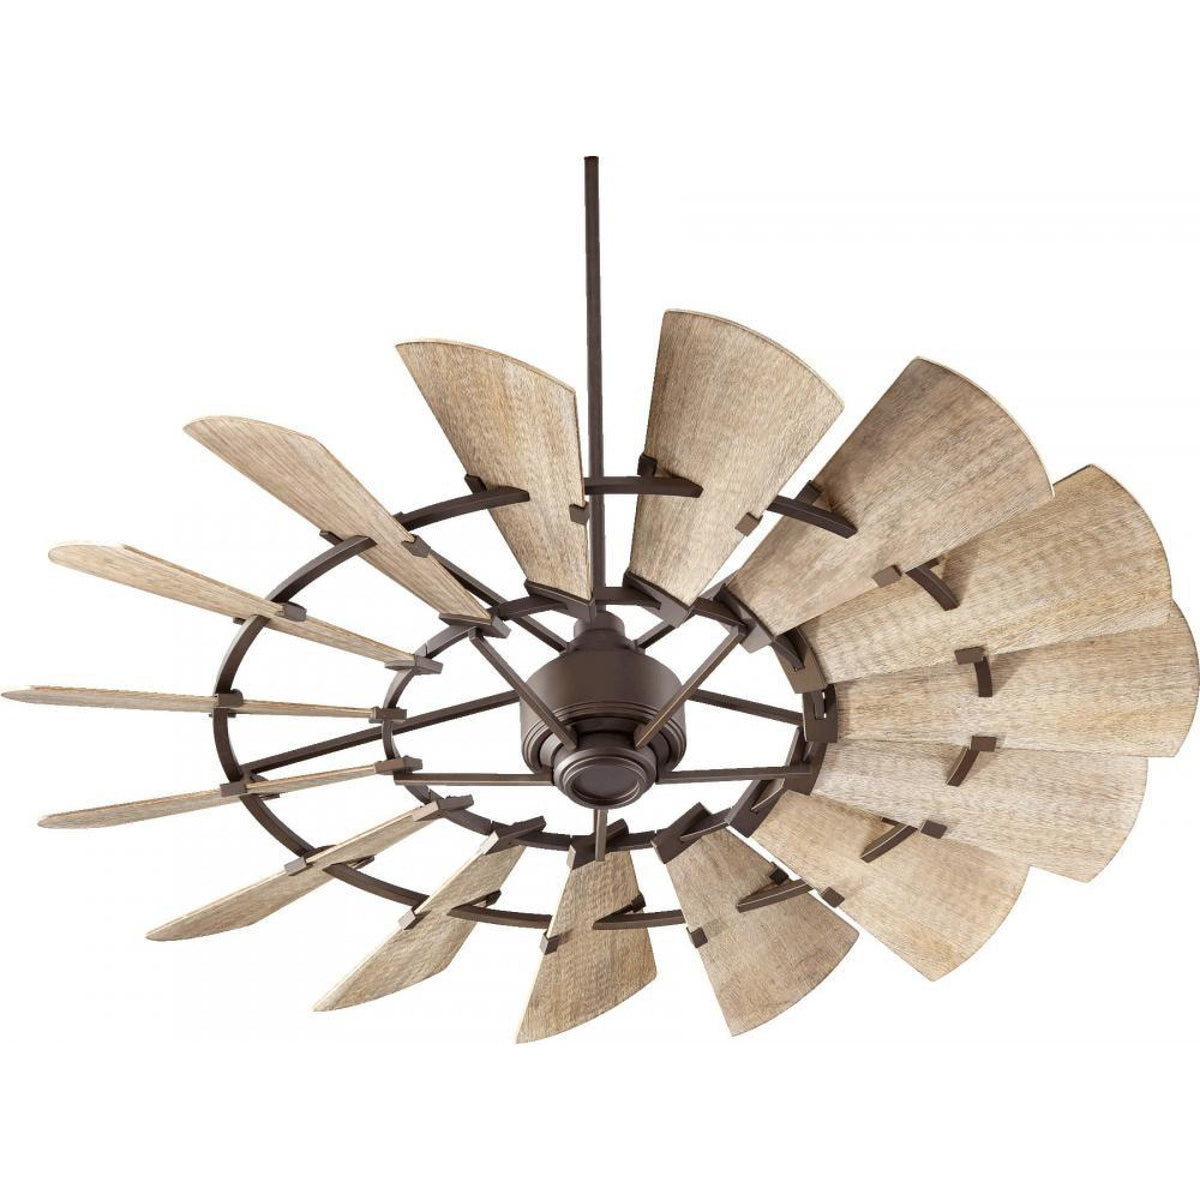 Quorum Windmill Ceiling Fan - Oiled Bronze - Outdoor 196010-86 60 inch Coastal Lighting